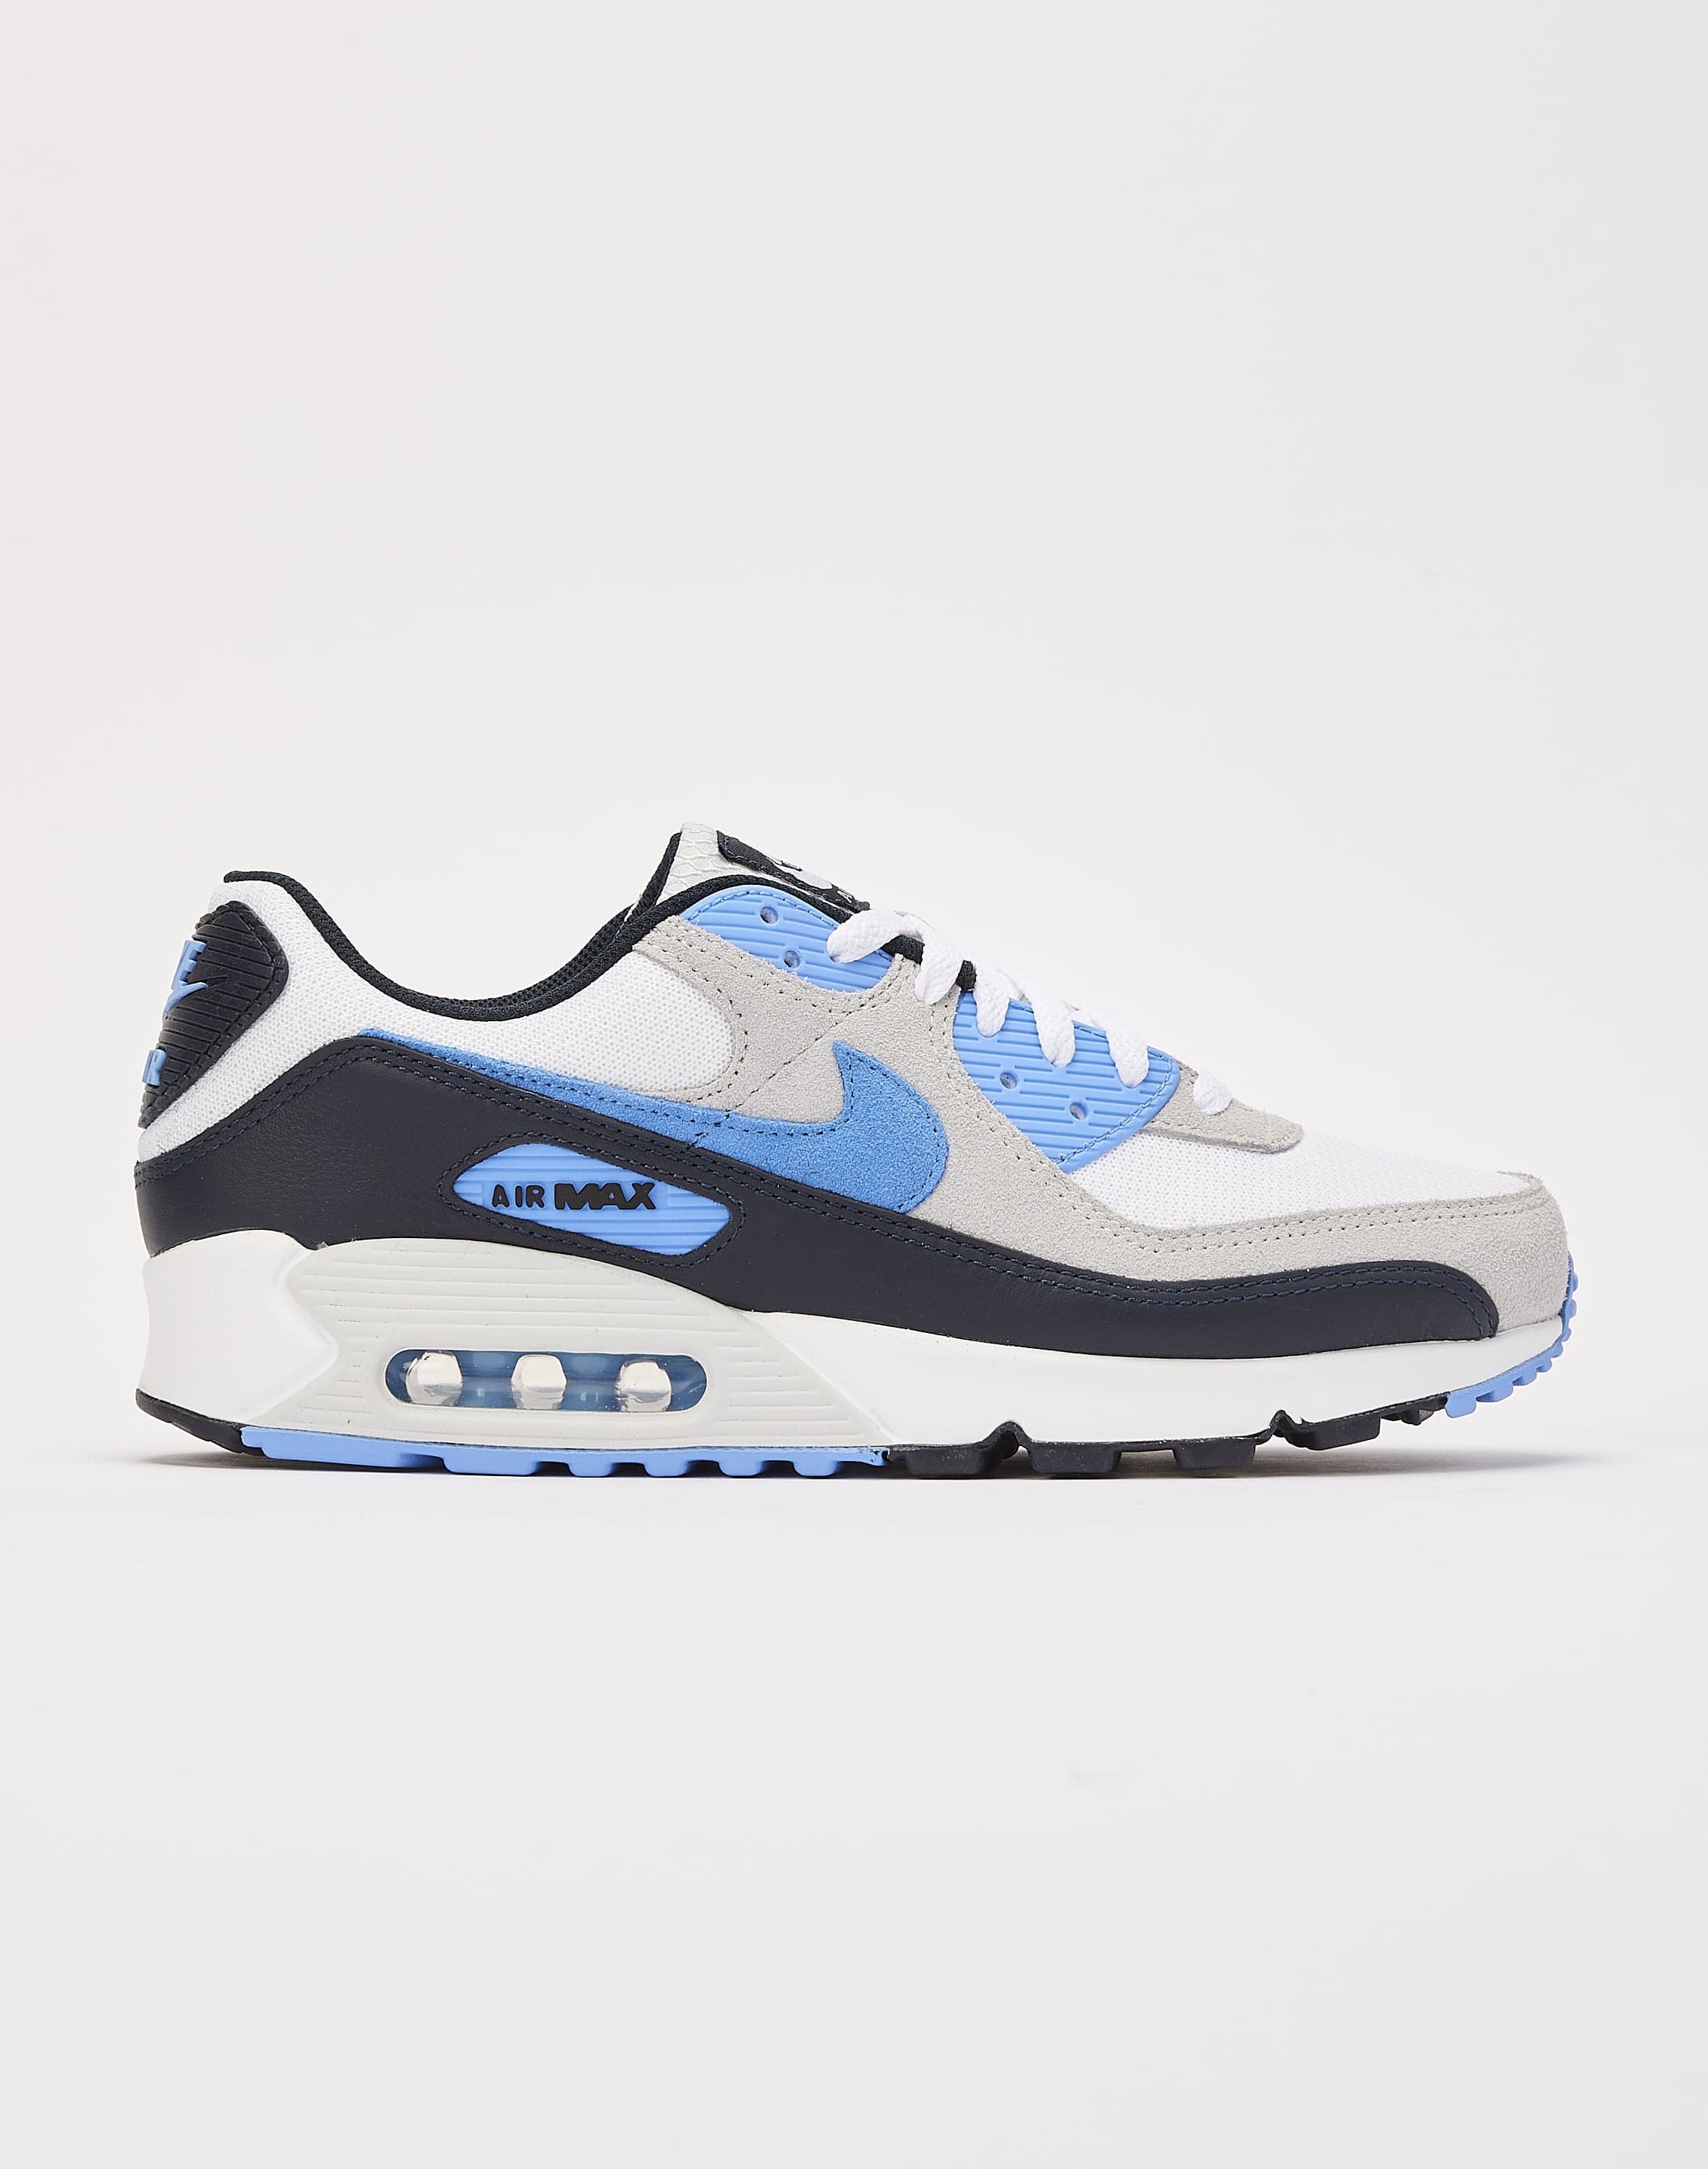 Nike Men's Air Max 90 Shoes, Size 8, White/University Blue